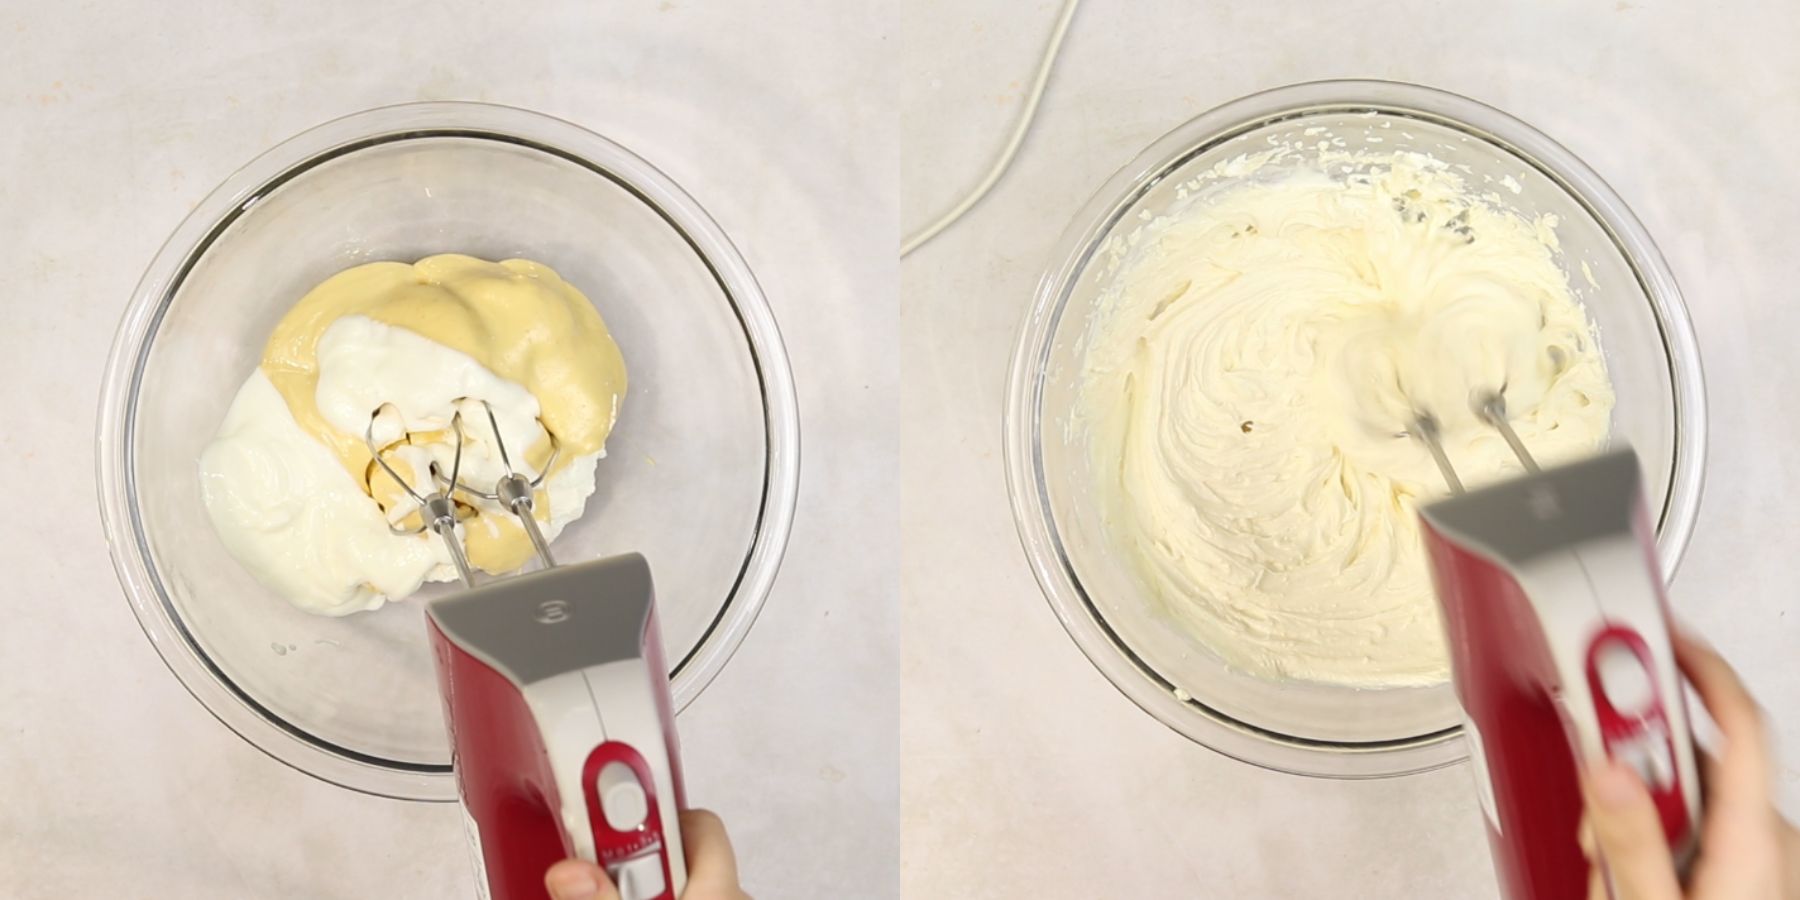 Mini cheesecakes process shots.